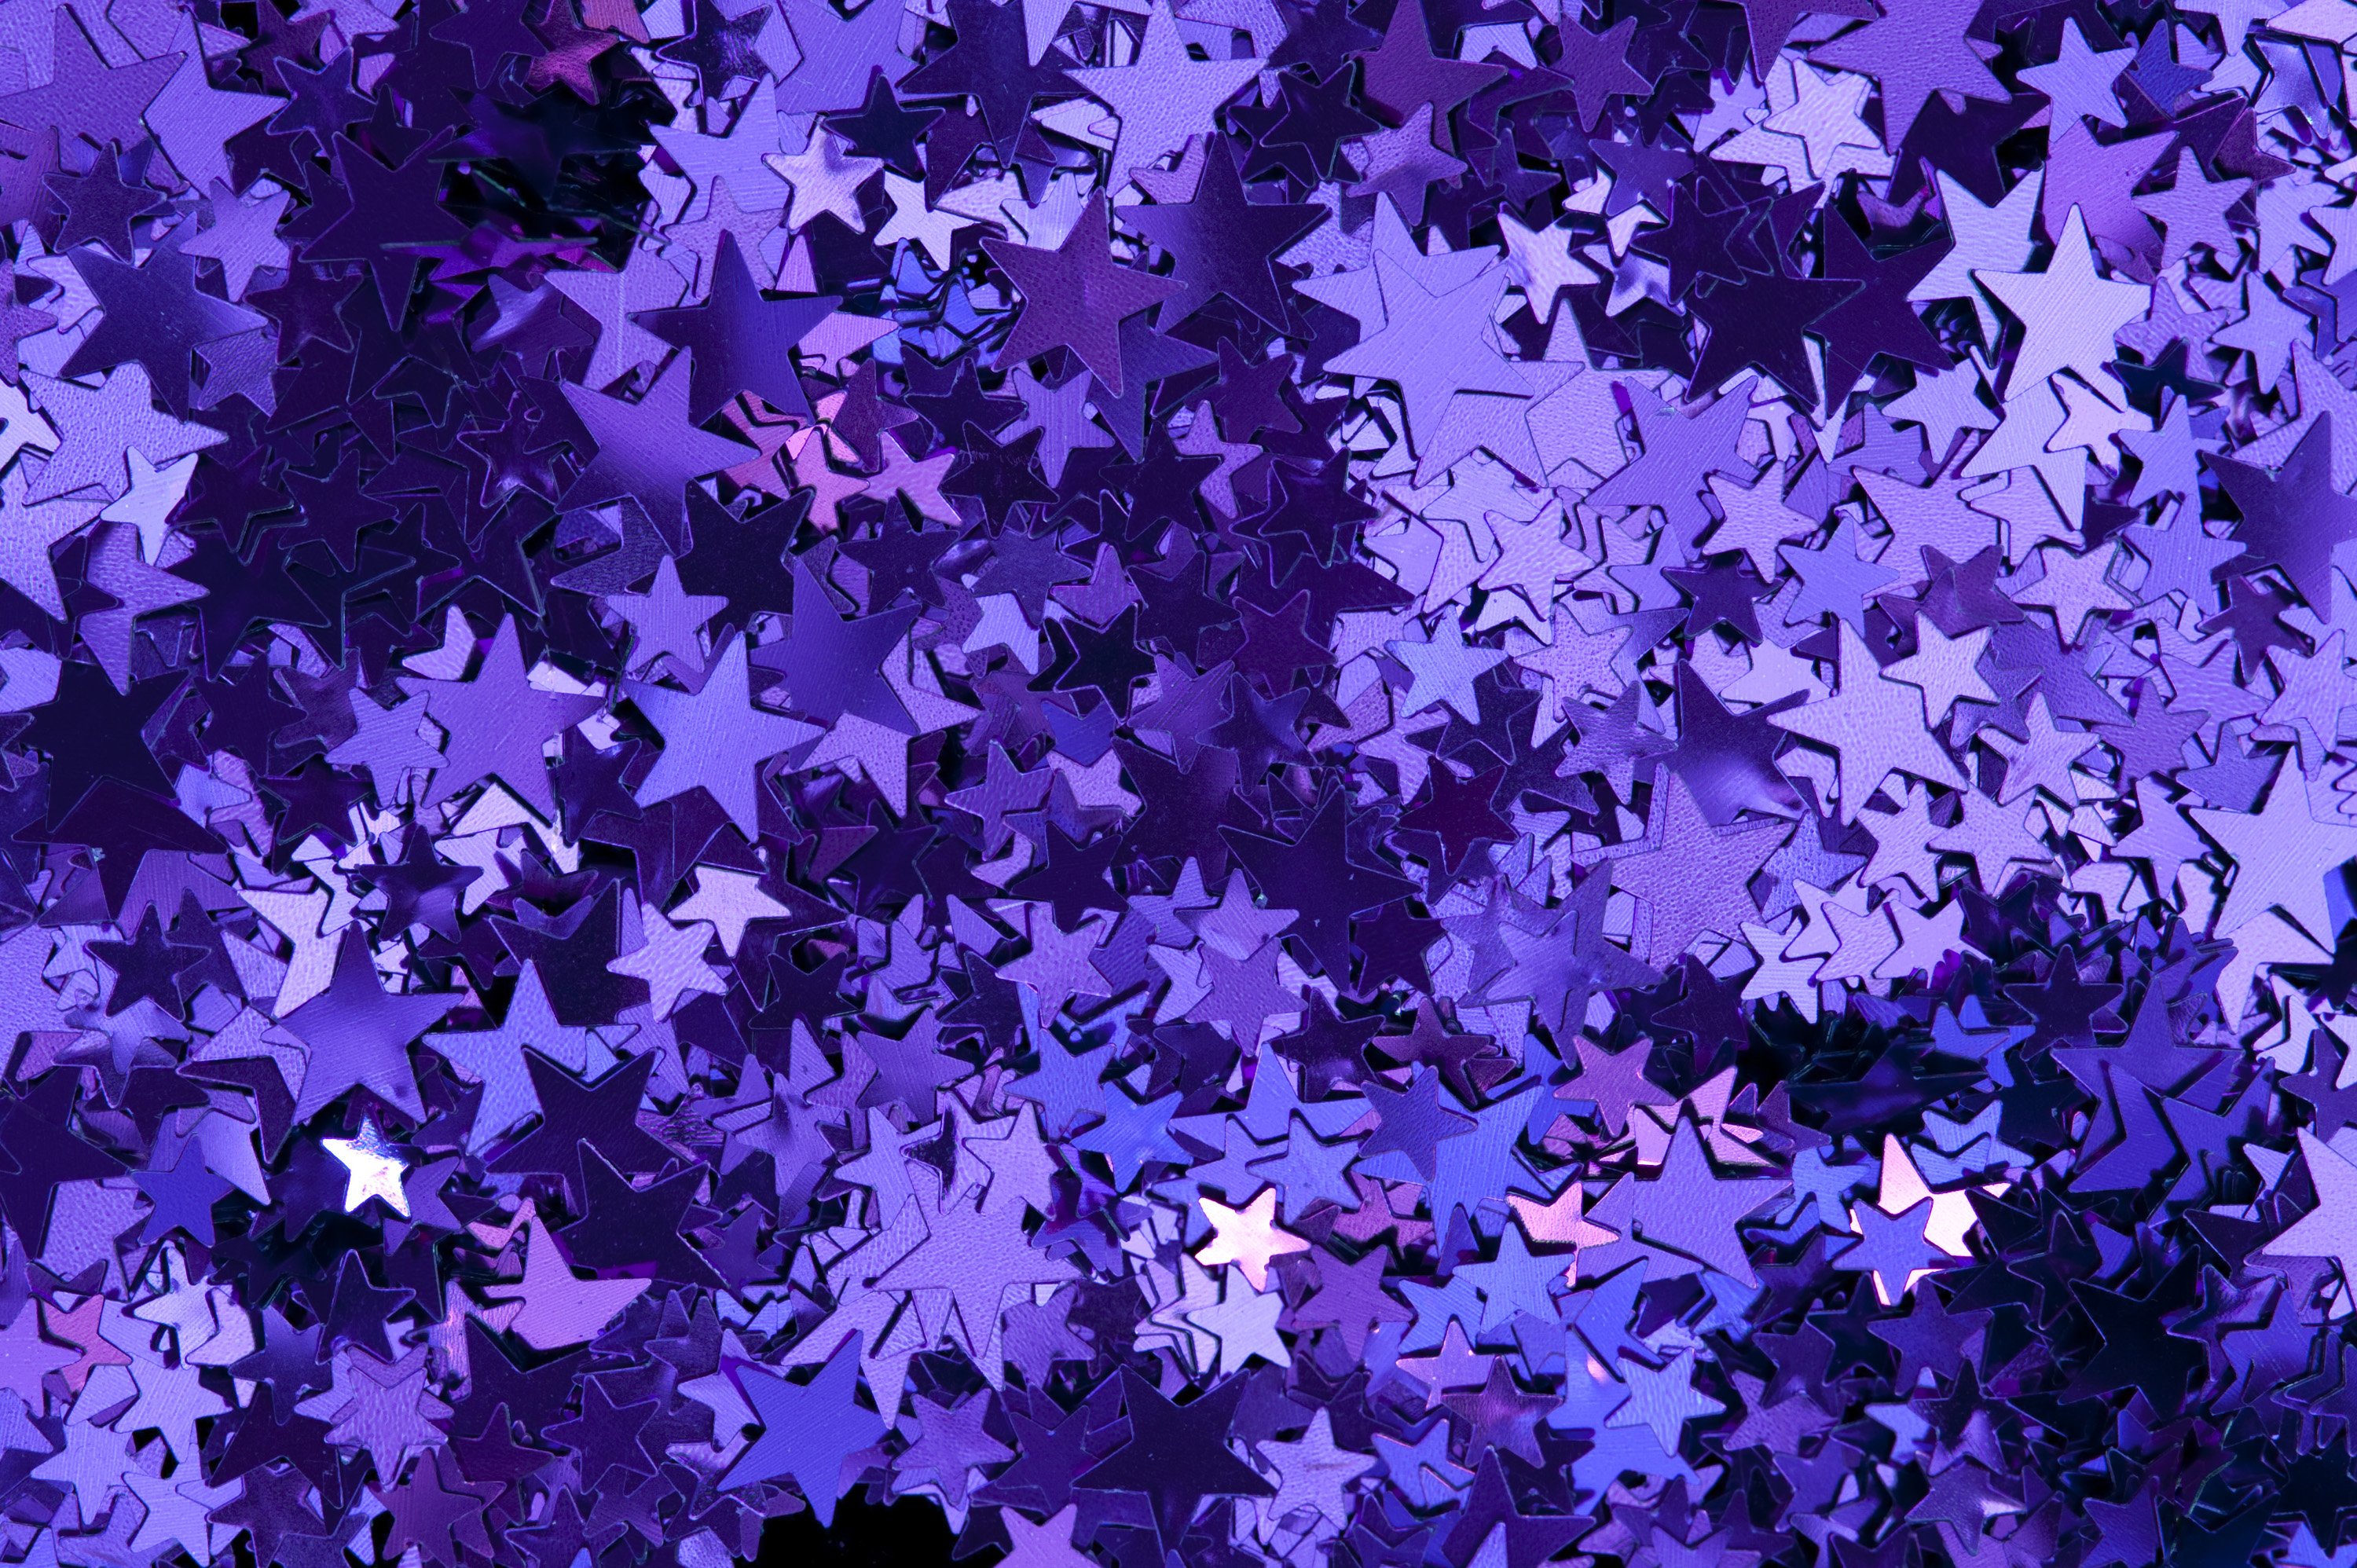 purple star glitter 2725 Stockarch Free Stock Photos